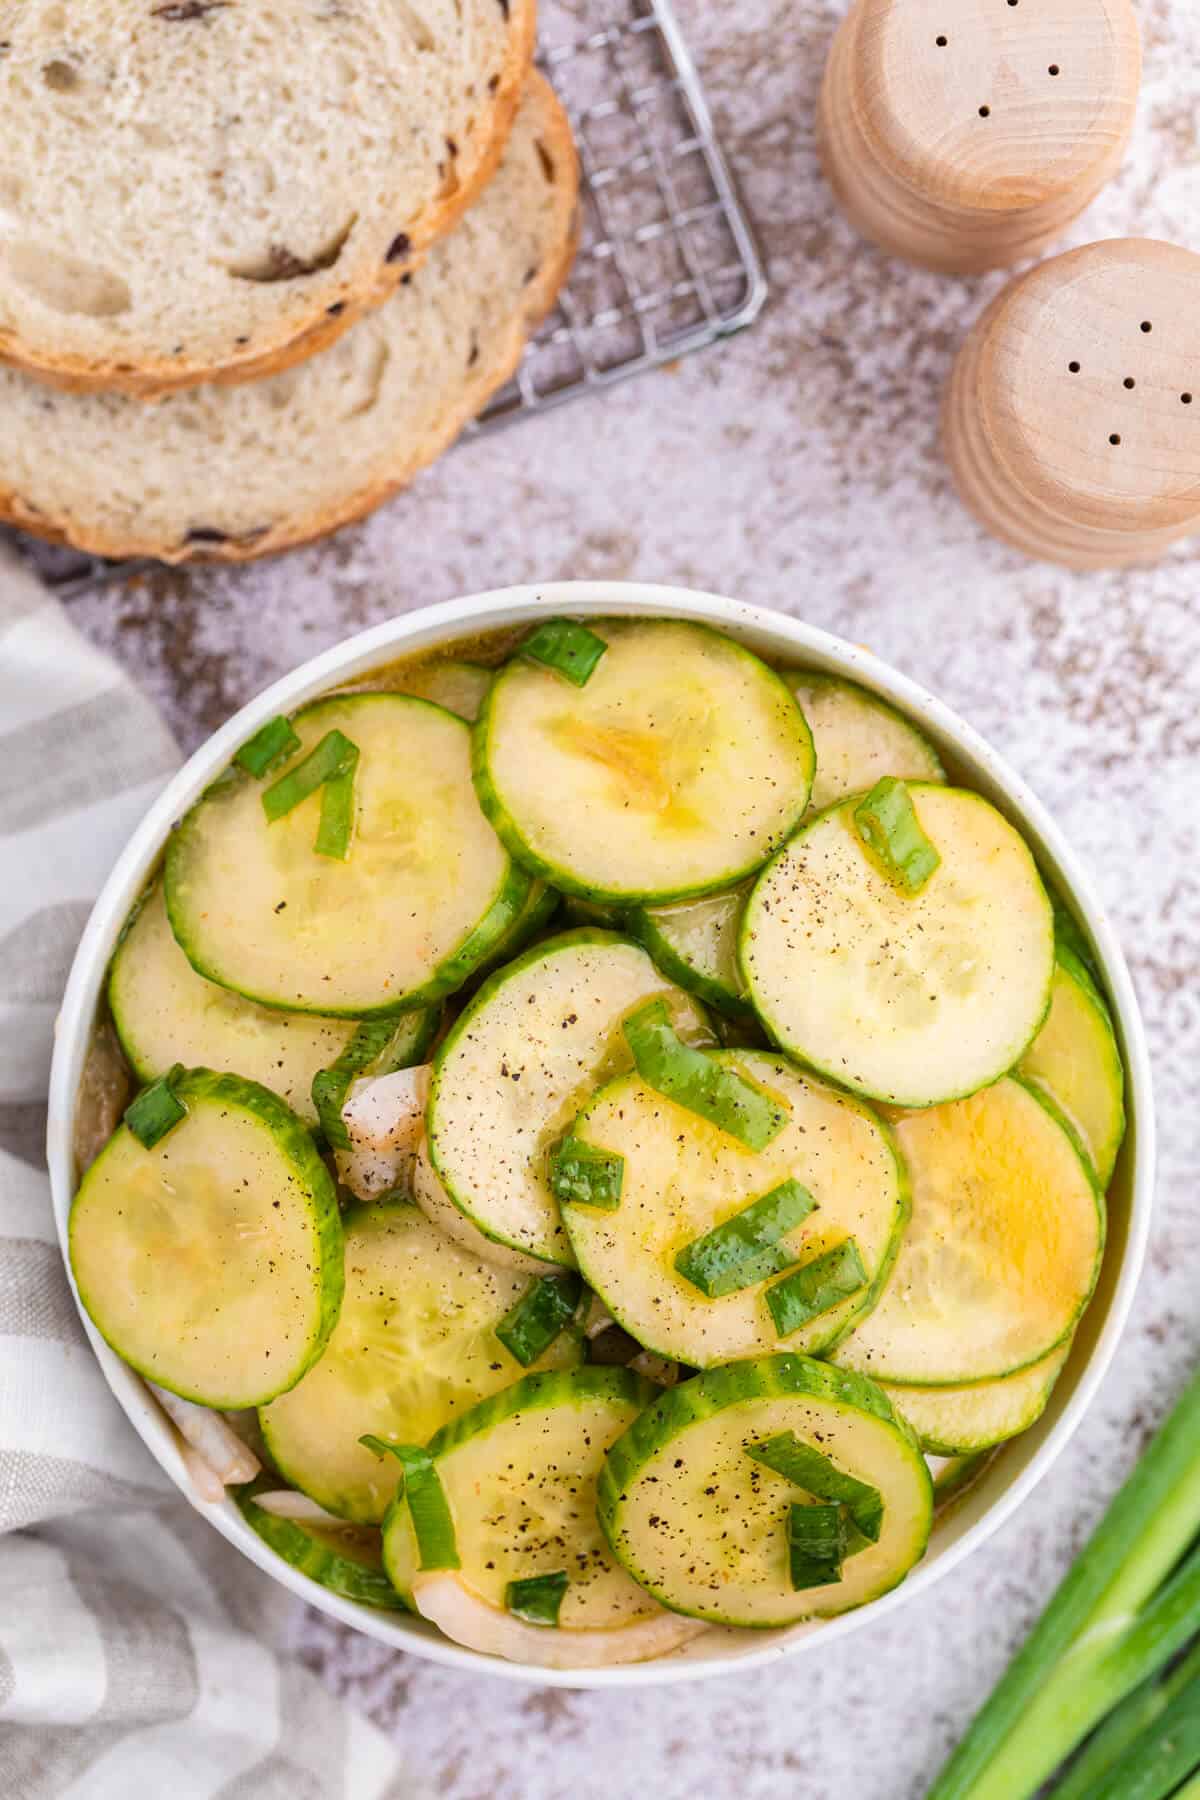 Cucumber salad in a bowl.